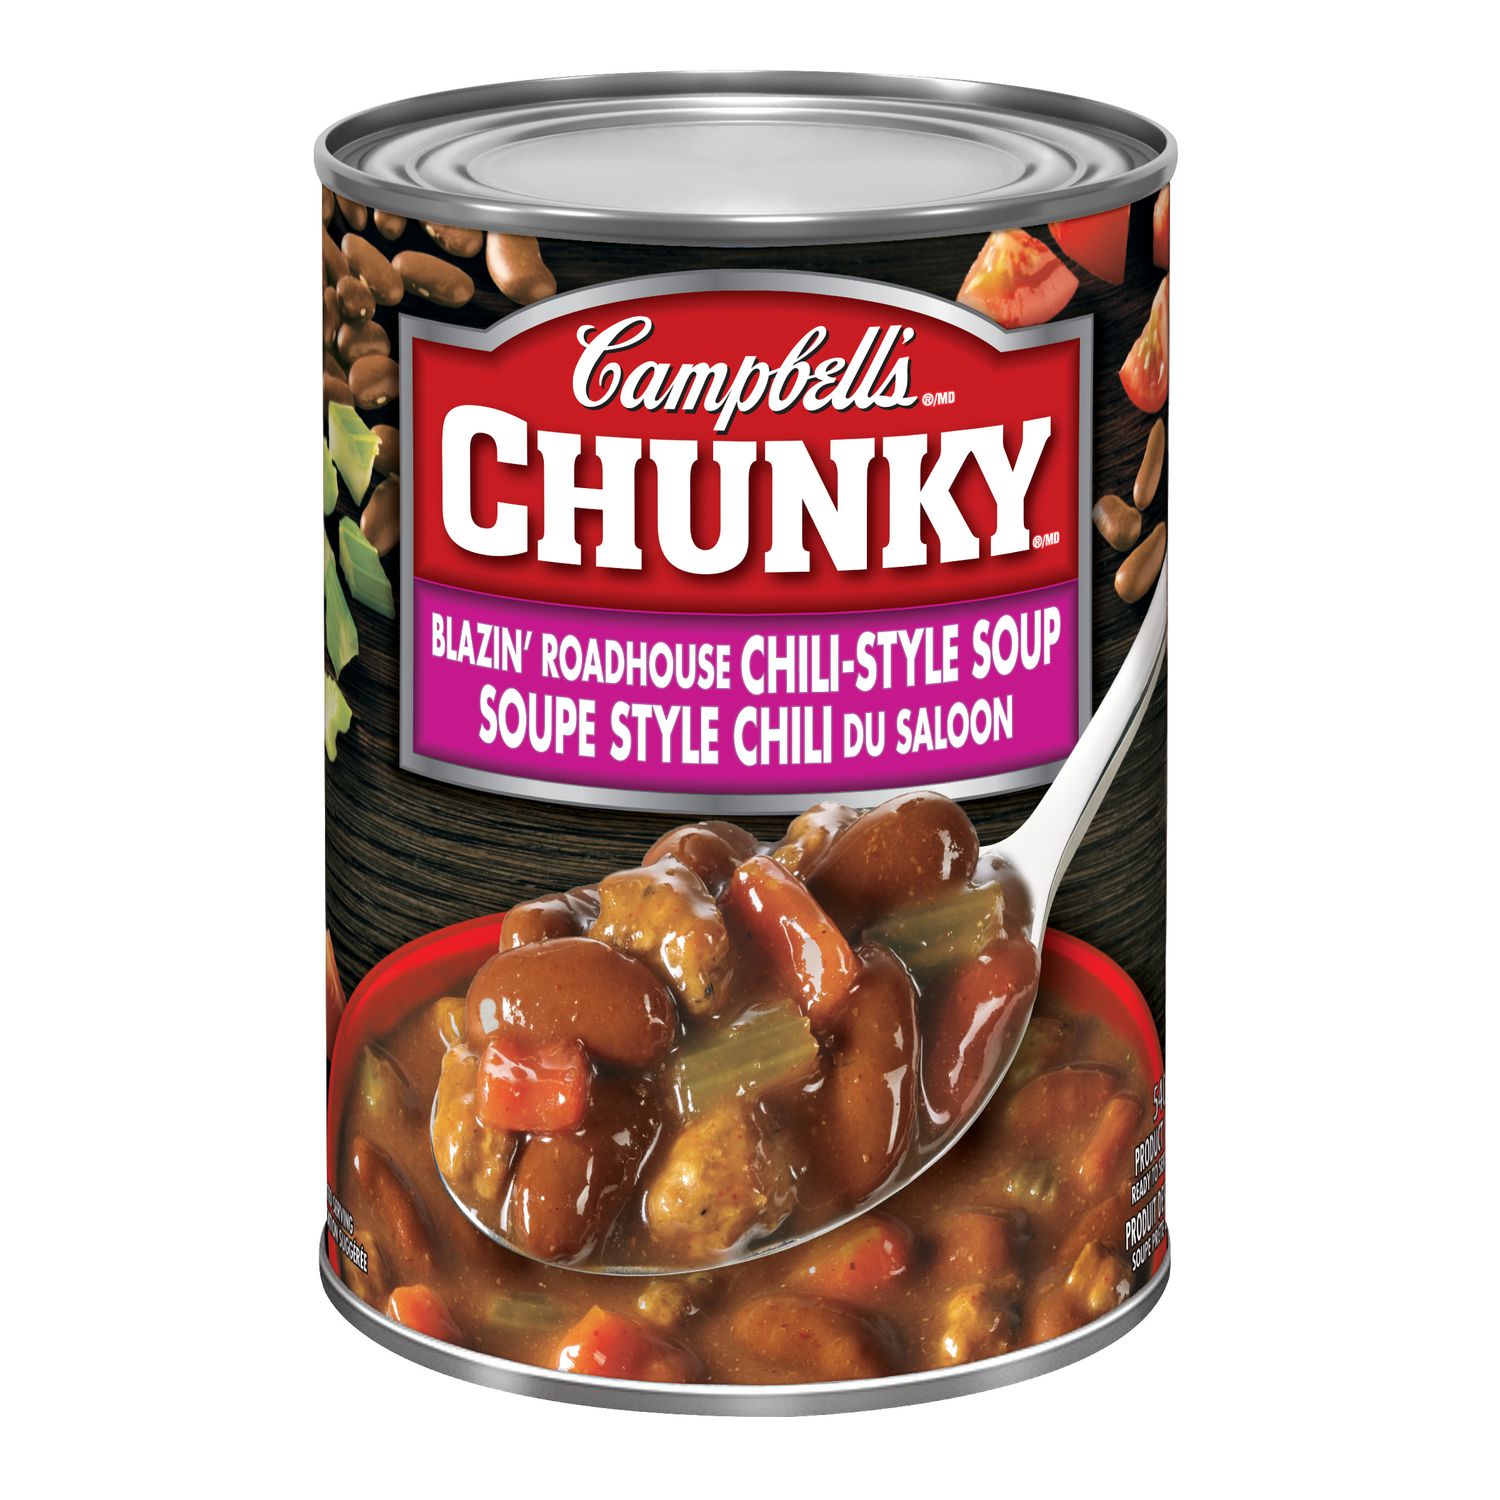 Campbells Chunky Blazin Roadhouse Chili Style Soup Walmart Canada